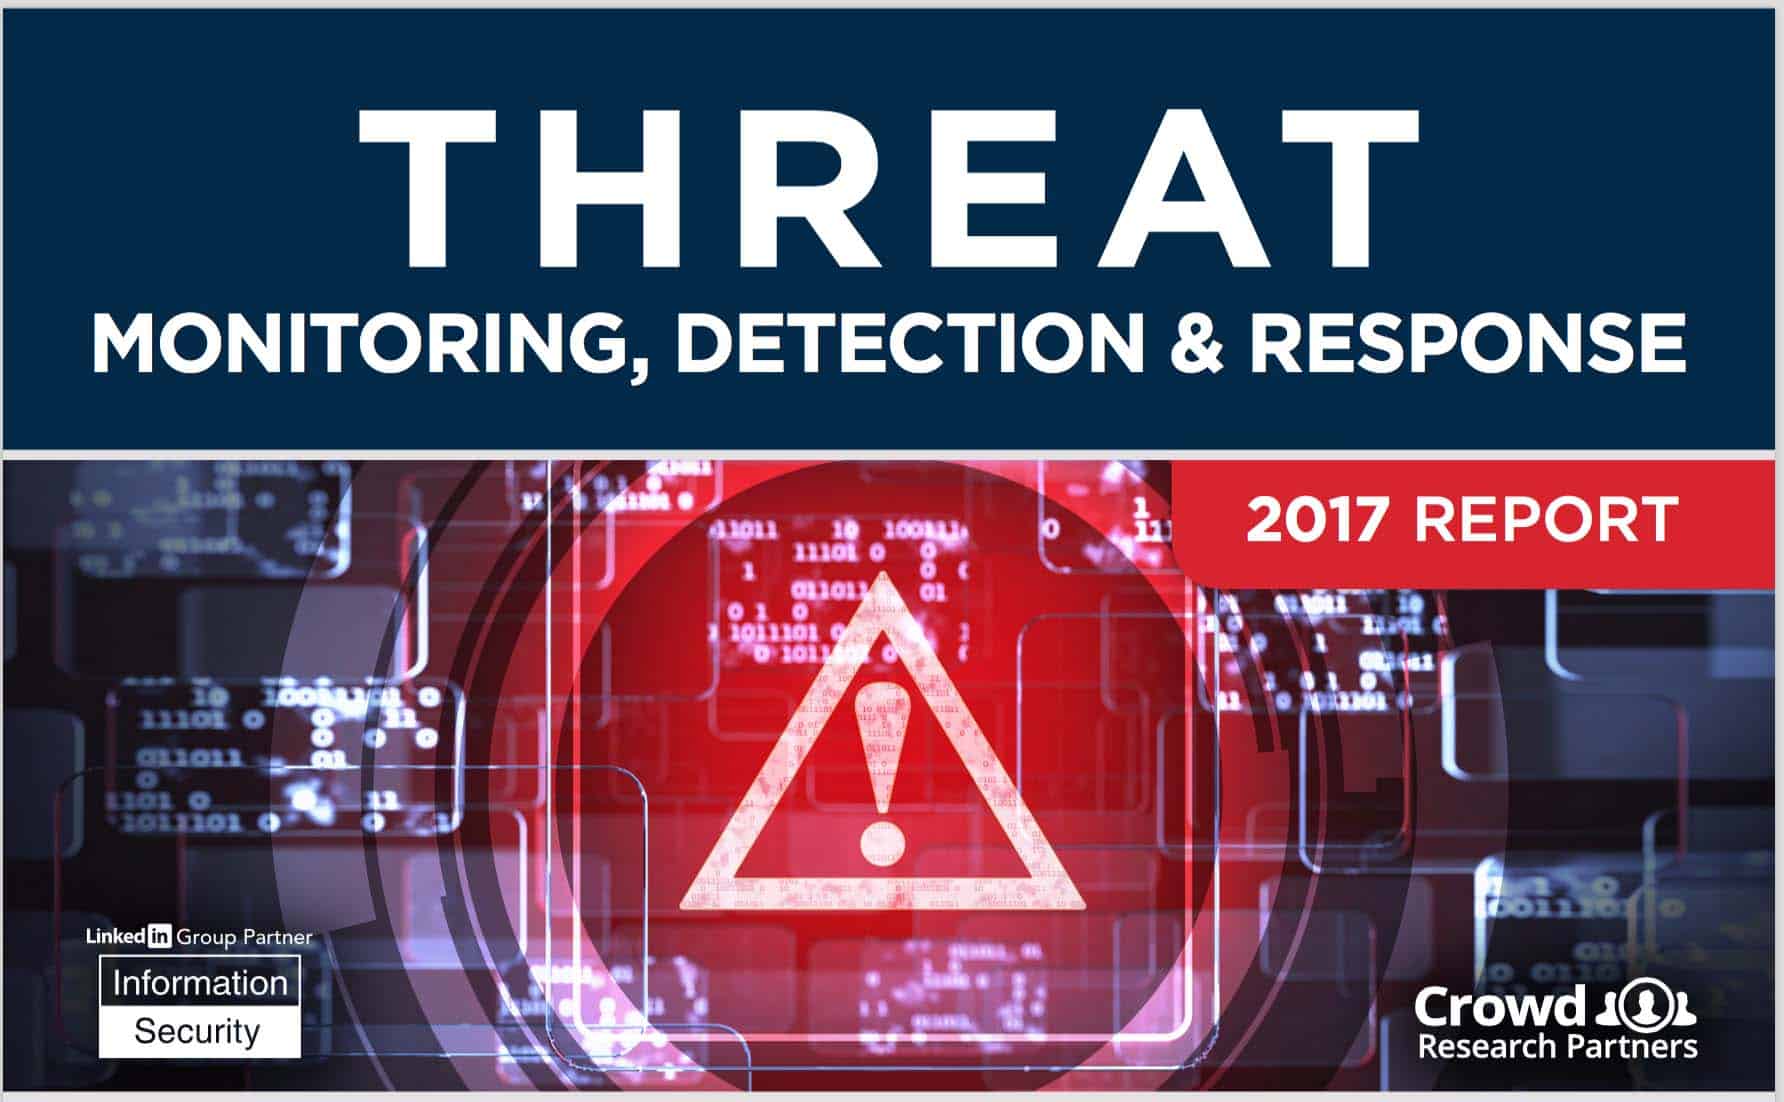 2017 threat monitoring report image.